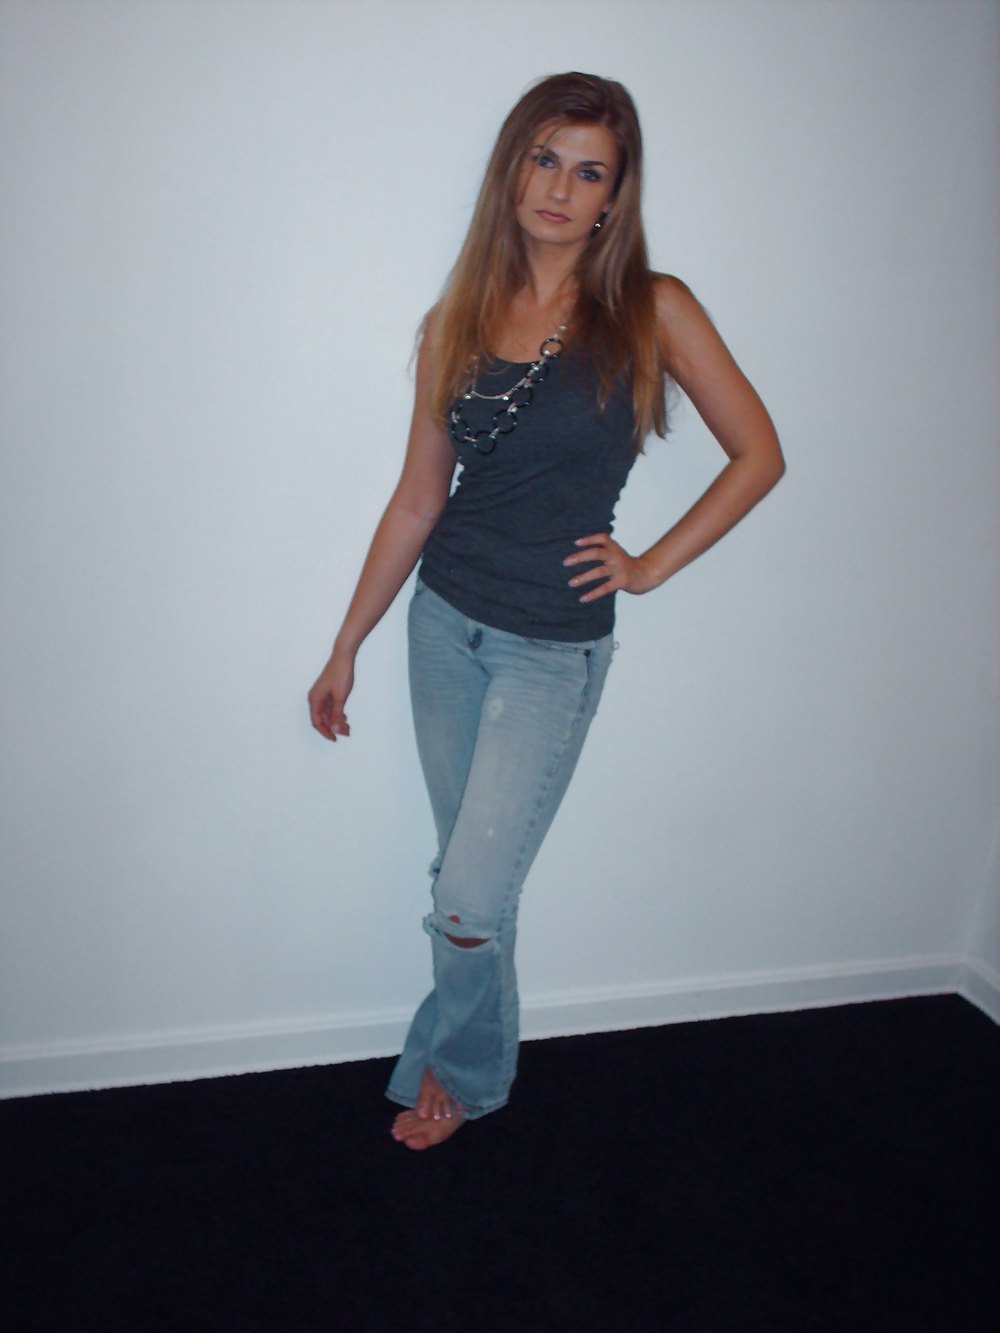 Free Amanda Ripped Jeans & Barefoot # 1 photos